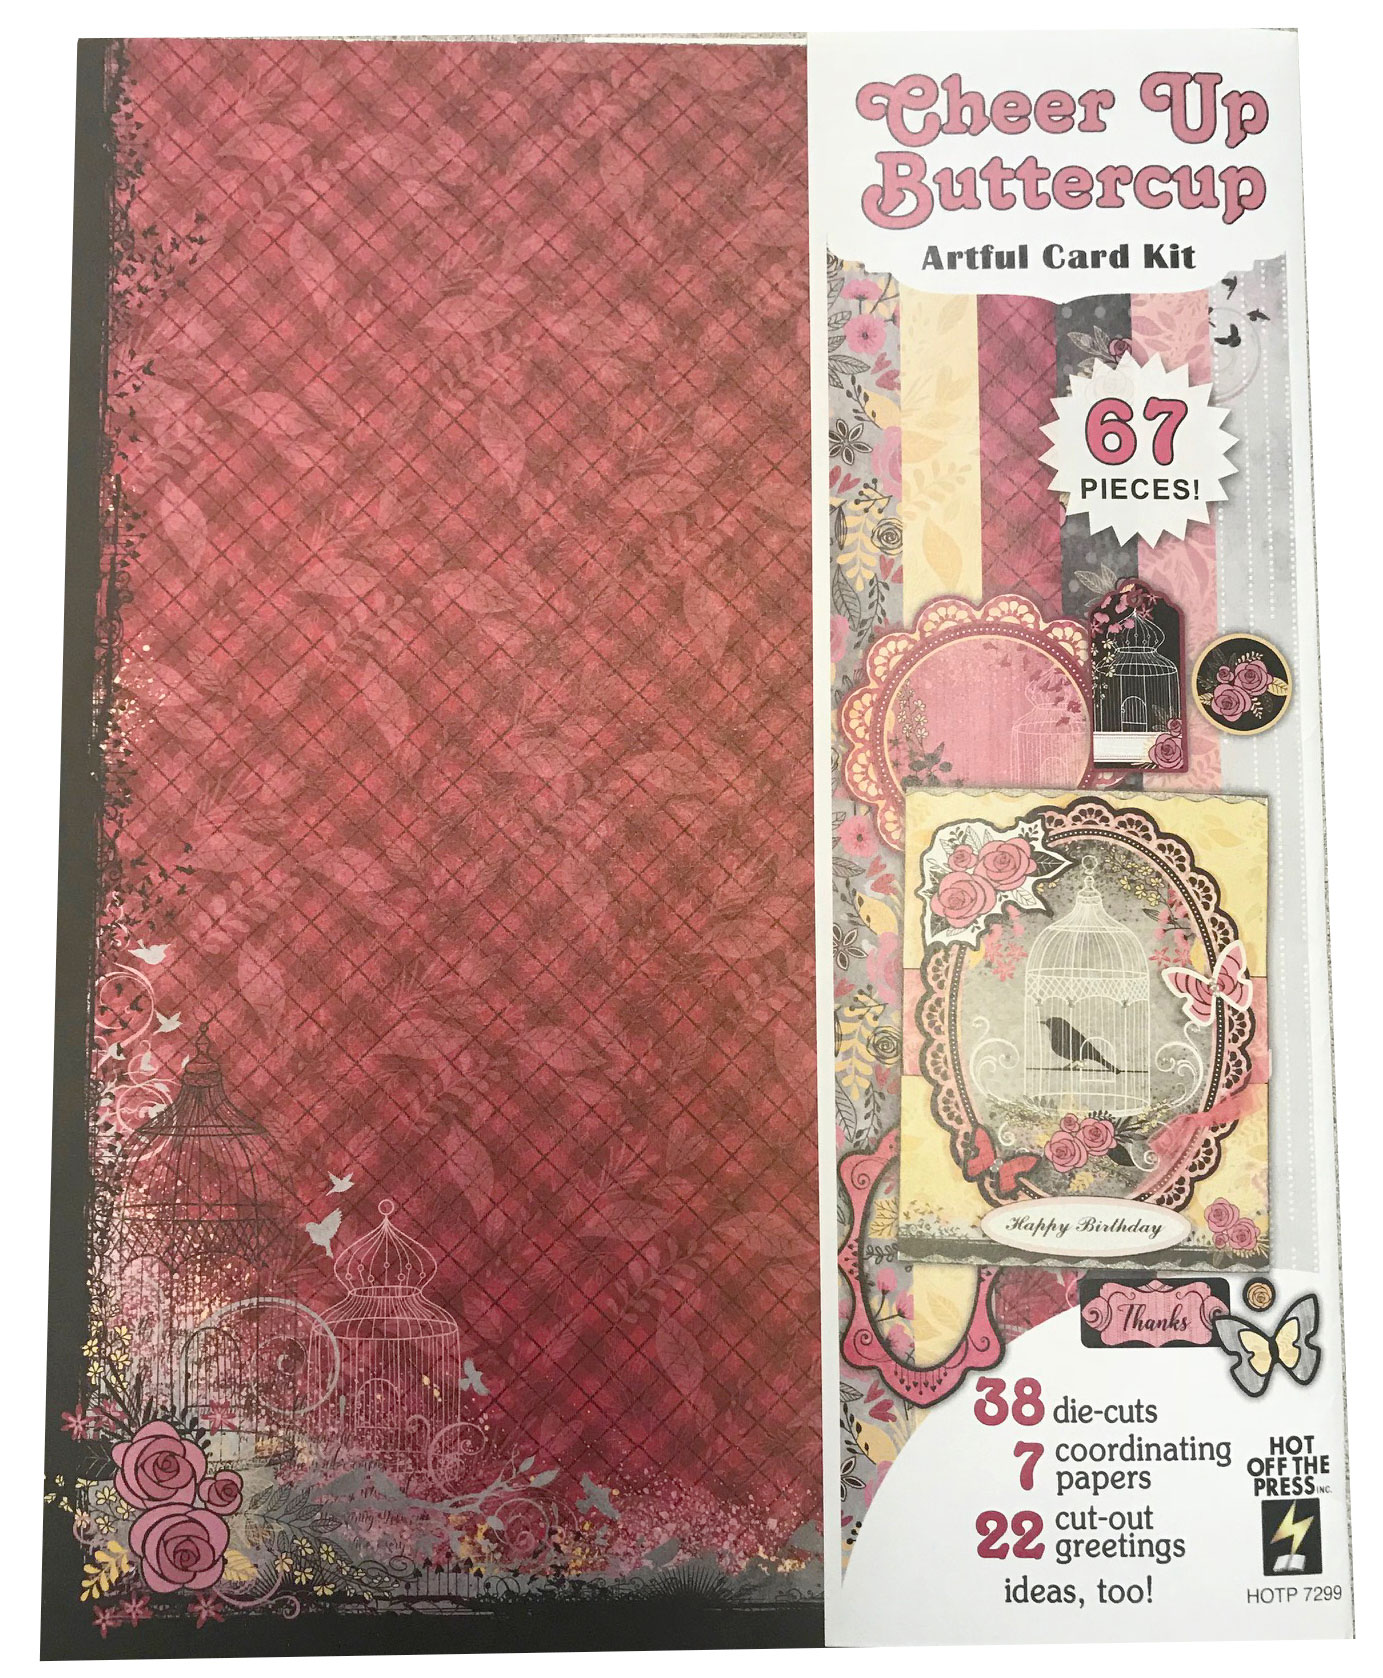 Cheer Up Buttercup Artful Card Kit